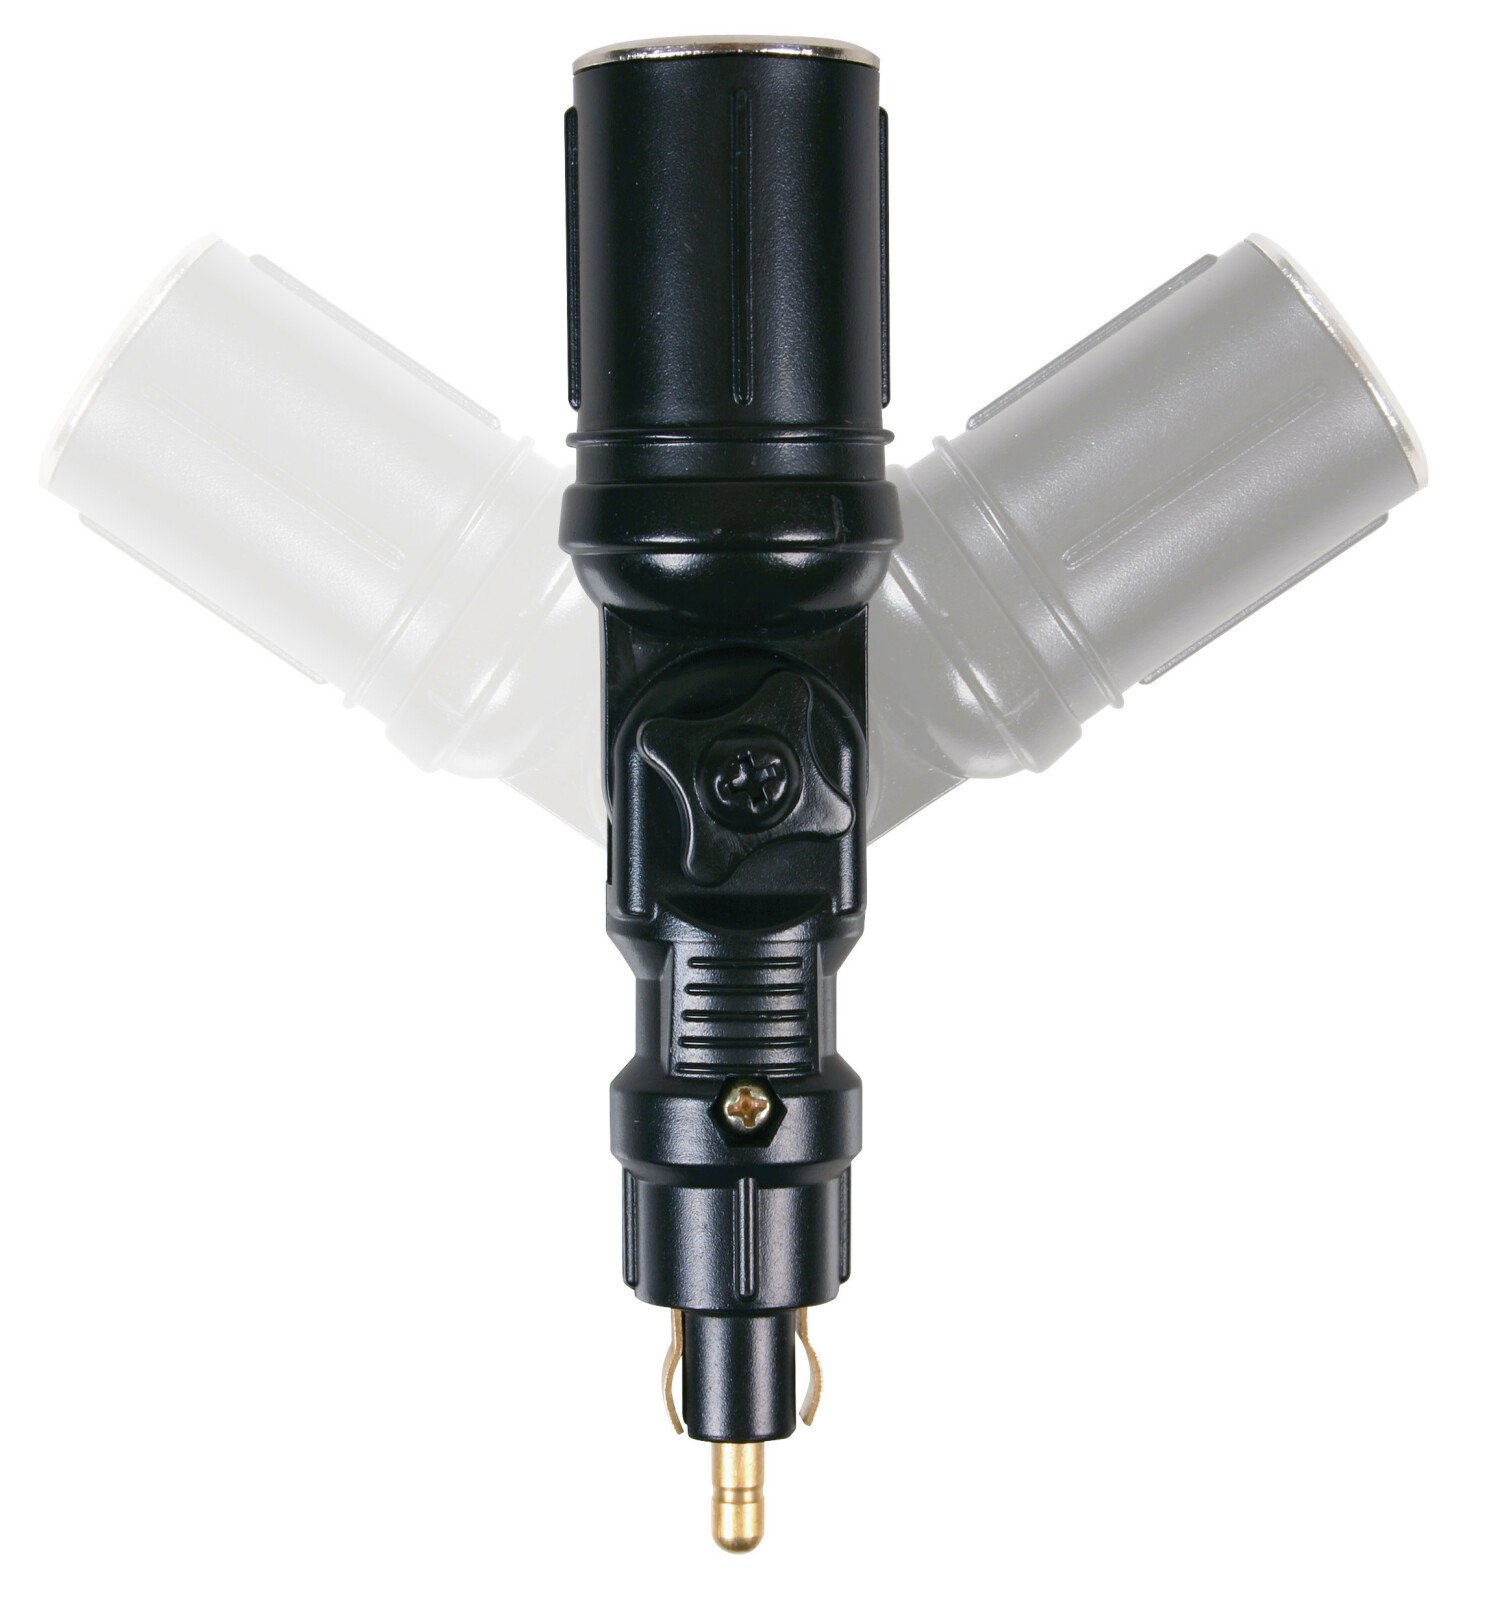 Adapter socket, 120° swivel joint 12/24V thumb